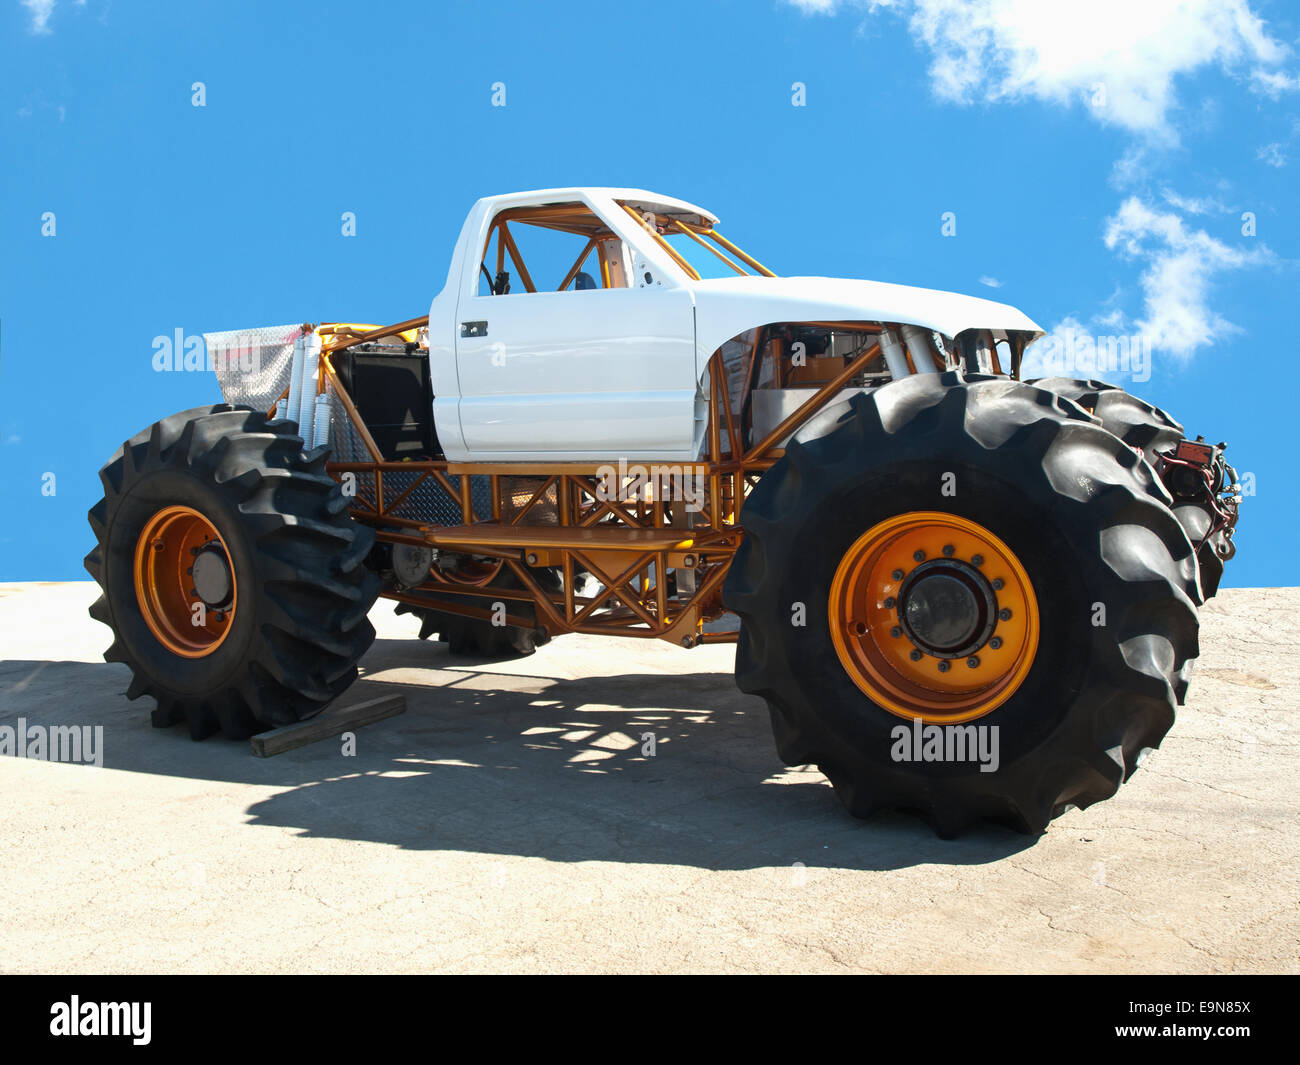 white monster truck Stock Photo - Alamy